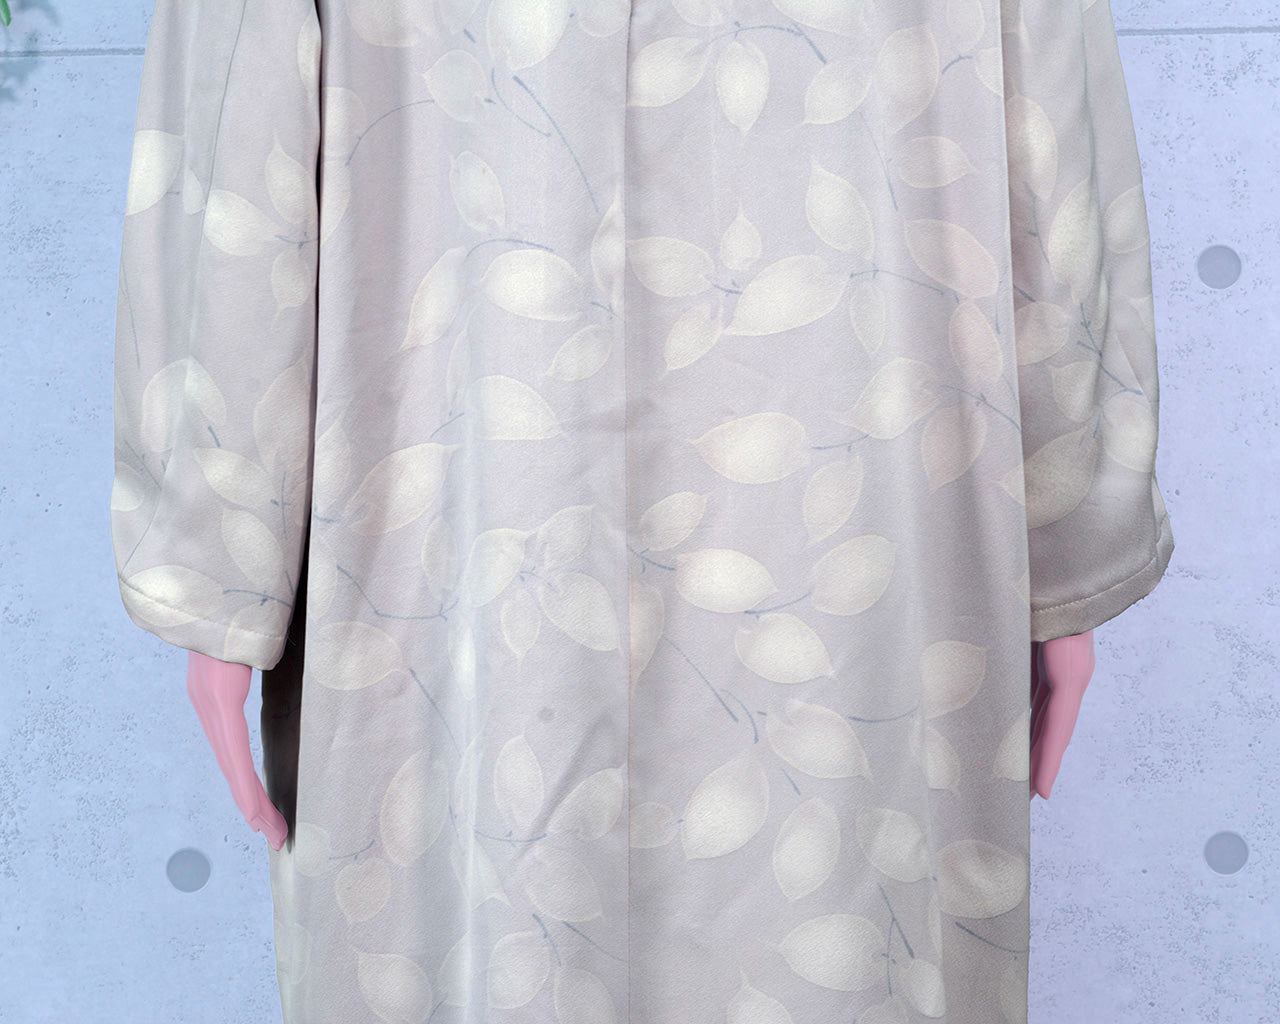 Japanese Vintage Kimono Remake One-piece, Long-sleeved, Round-necked, Tree-leaf Pattern, Chirimen Komon (Cotton Pattern)